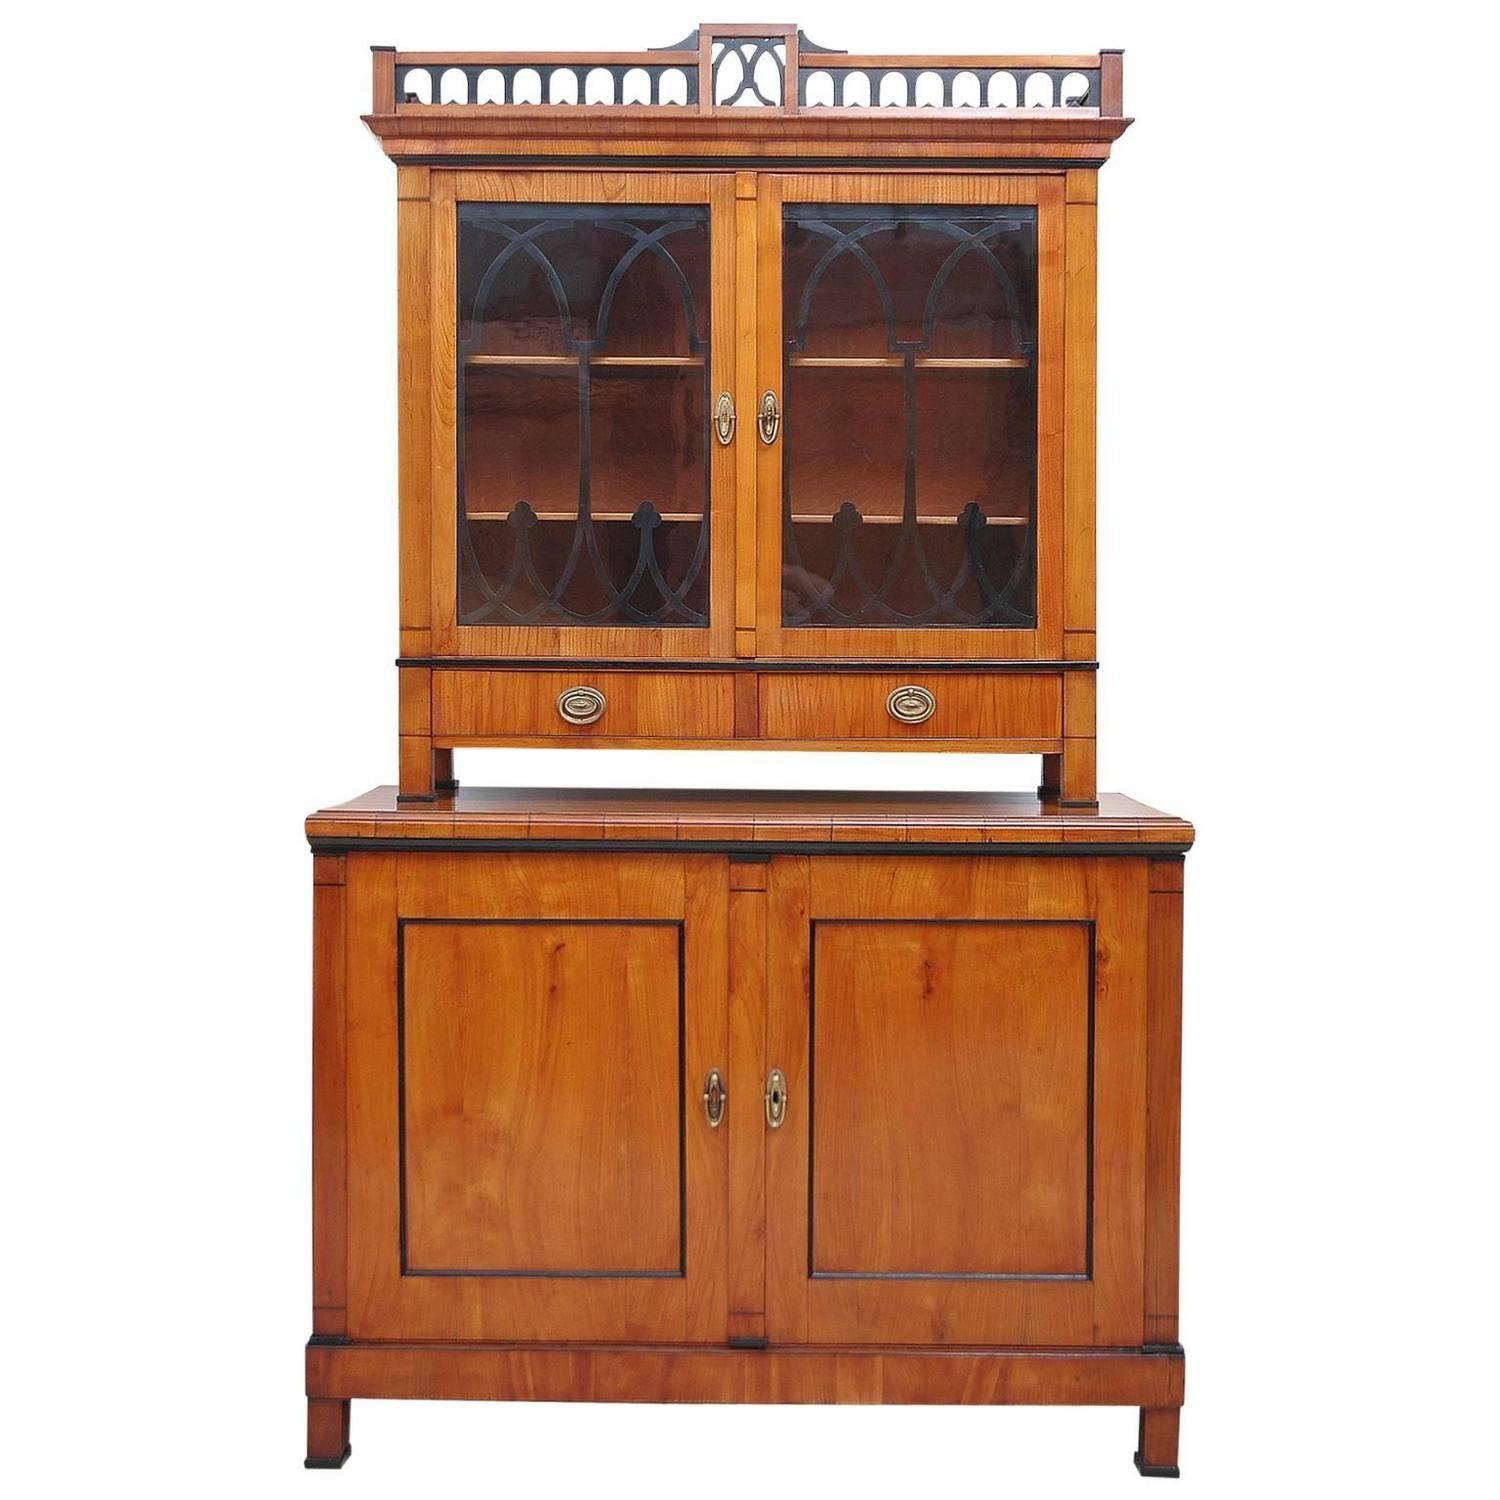  Austrian Biedermeier Cupboard/Bar Cabinet in Cherrywood with Vitrine, c. 1820 For Sale